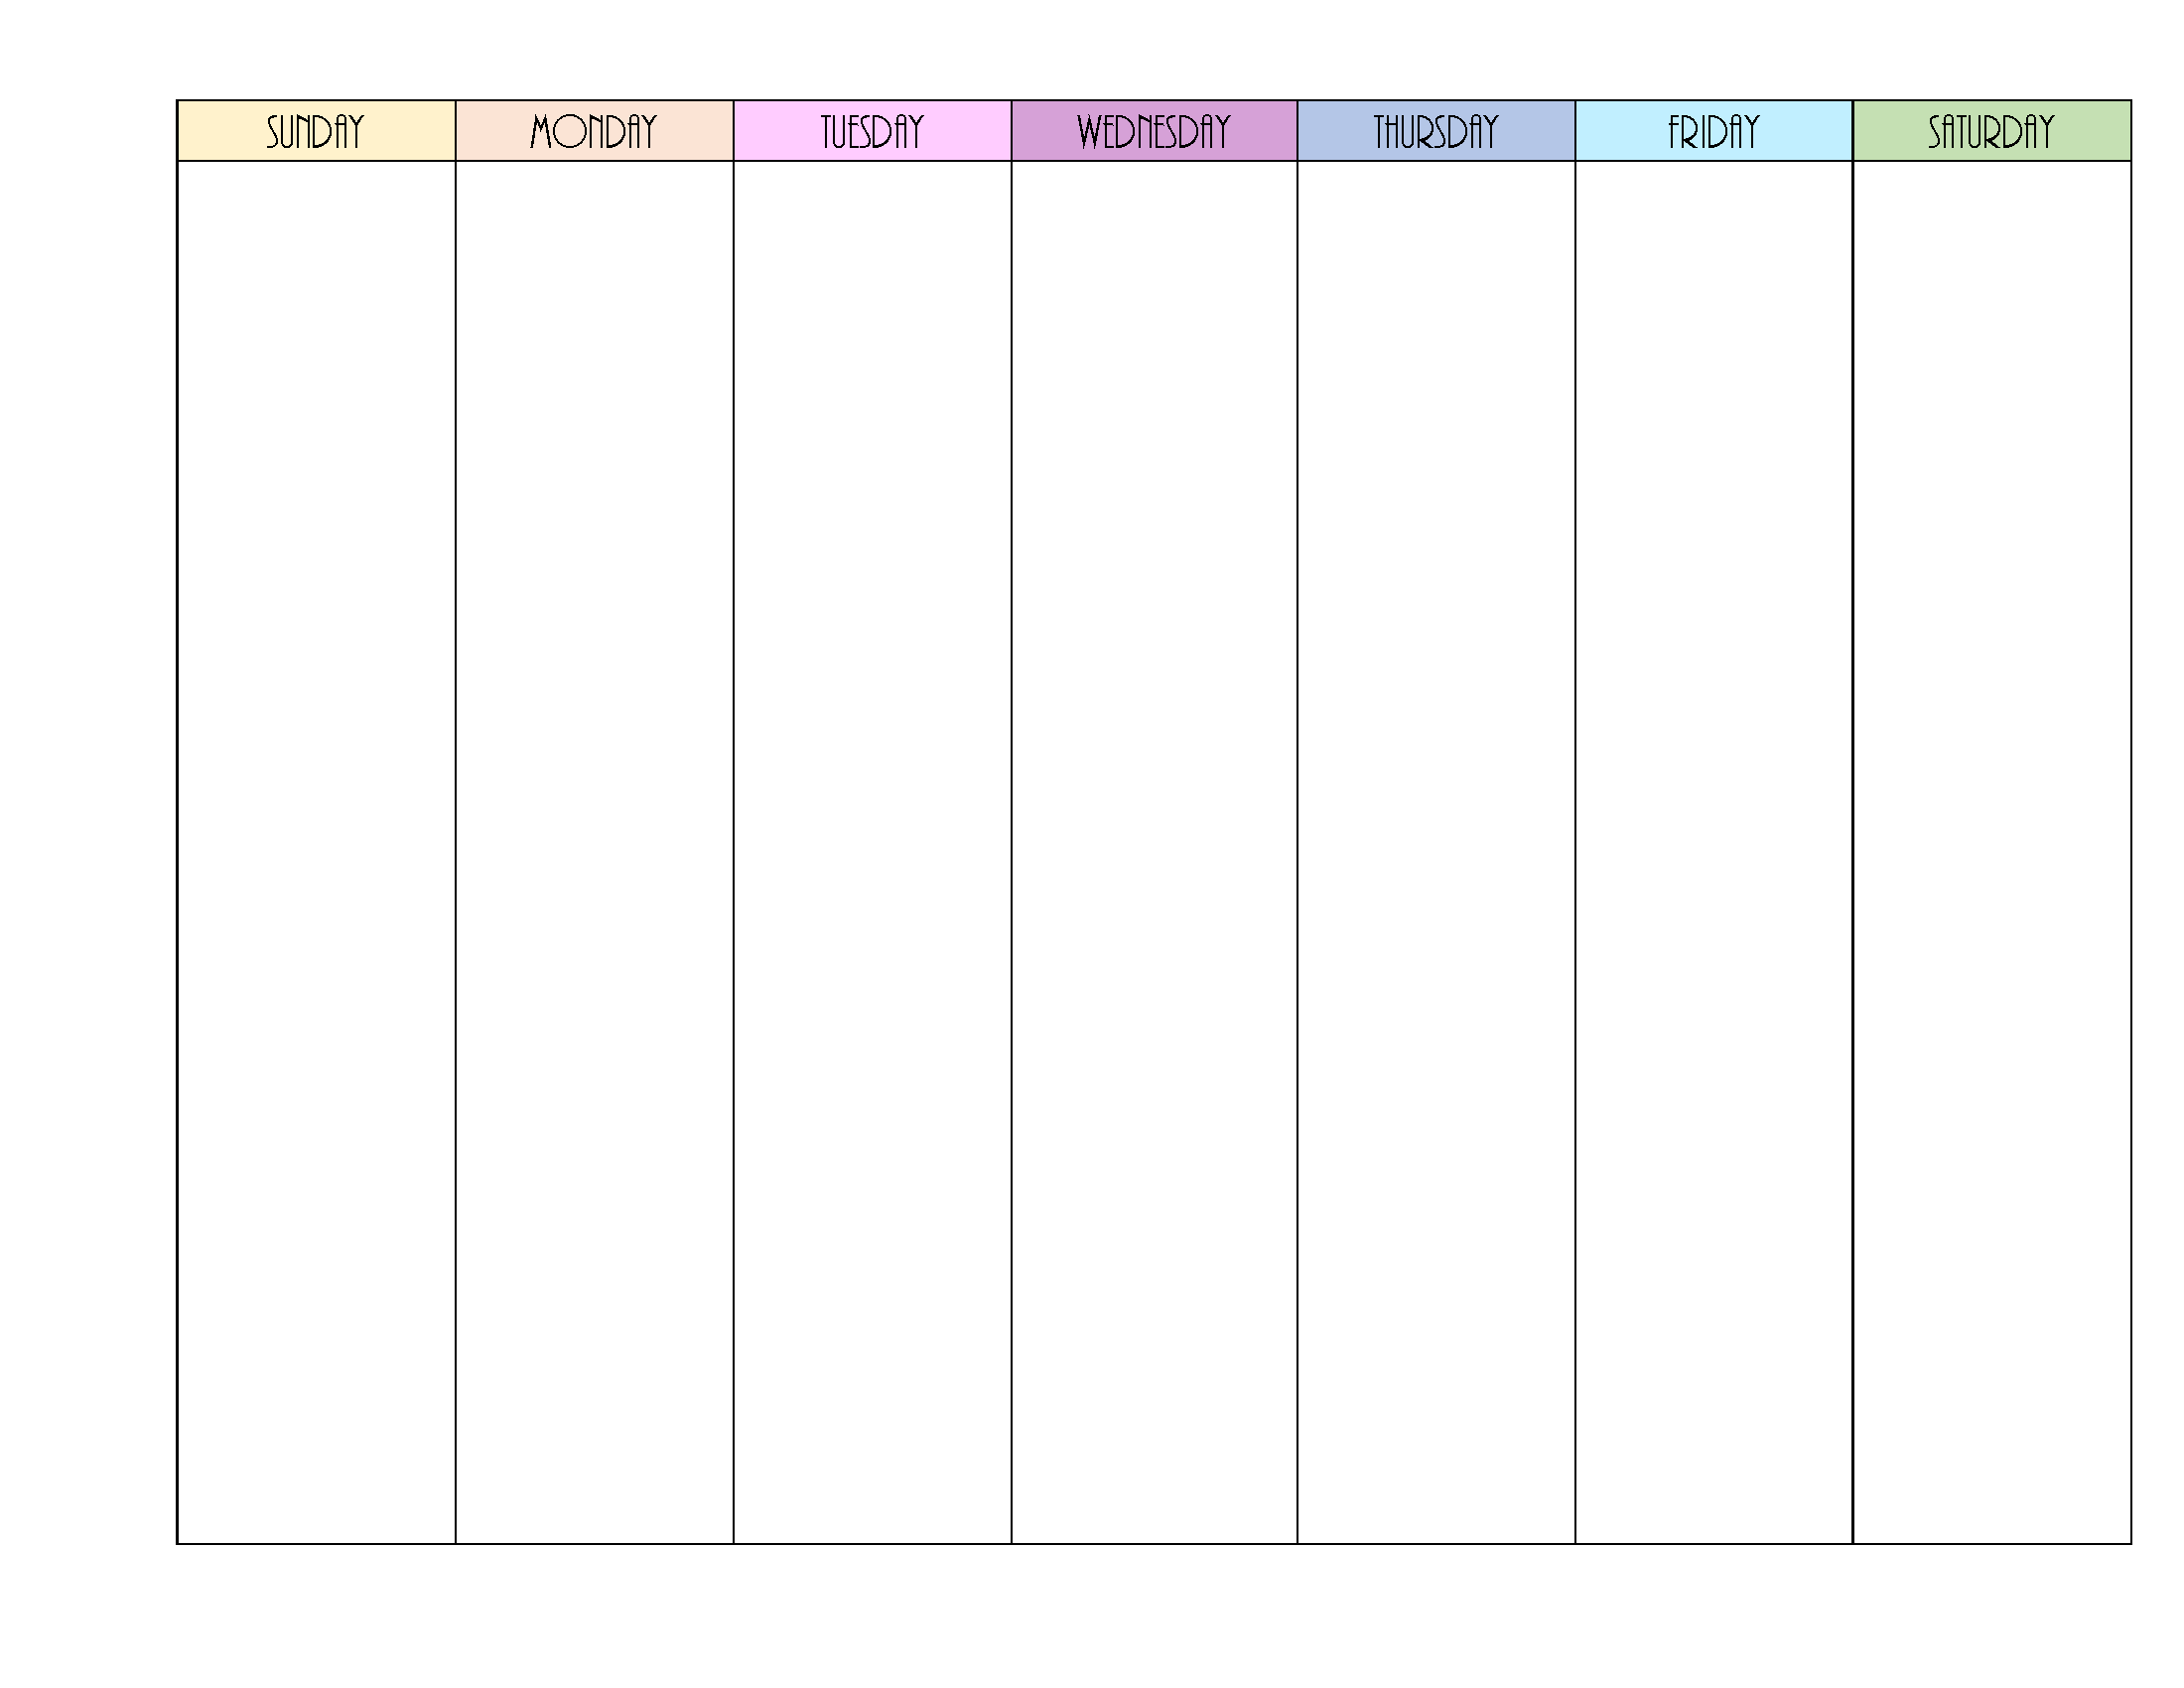 weekly-planner-template-image-7-free-printable-weekly-calendar-weekly-calendar-planner-week